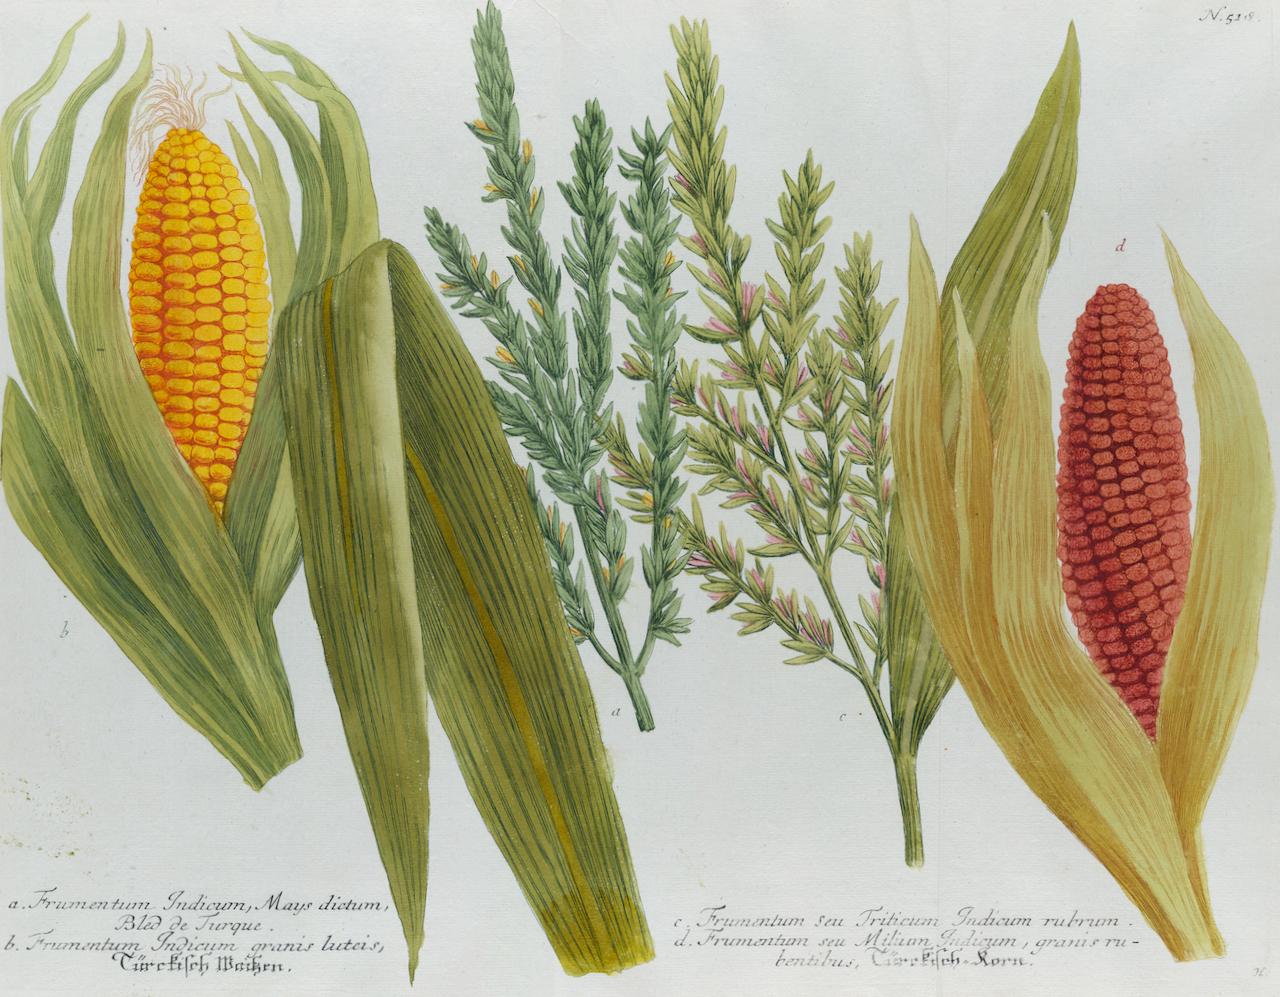 Corn, Maize: An 18th Century Hand-colored Botanical Engraving by J. Weinmann - Print by Johann Wilhelm Weinmann